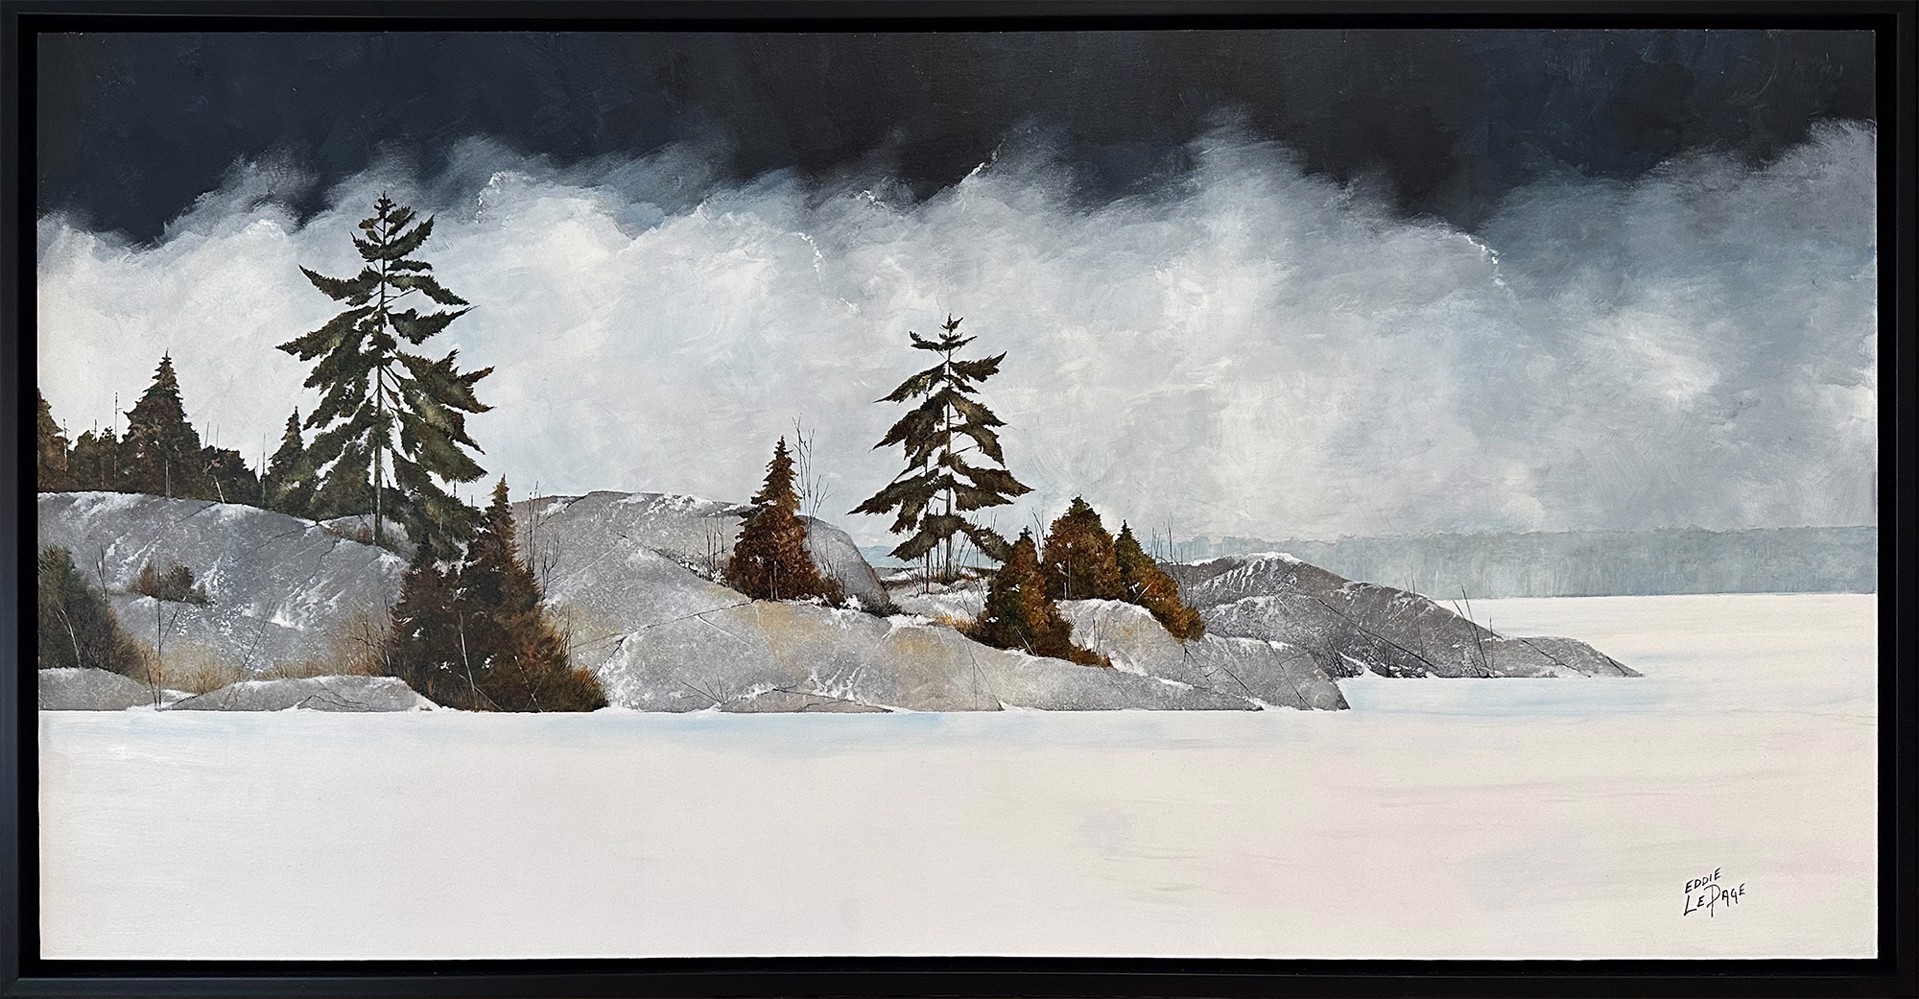 Cold Winter by Eddie LePage